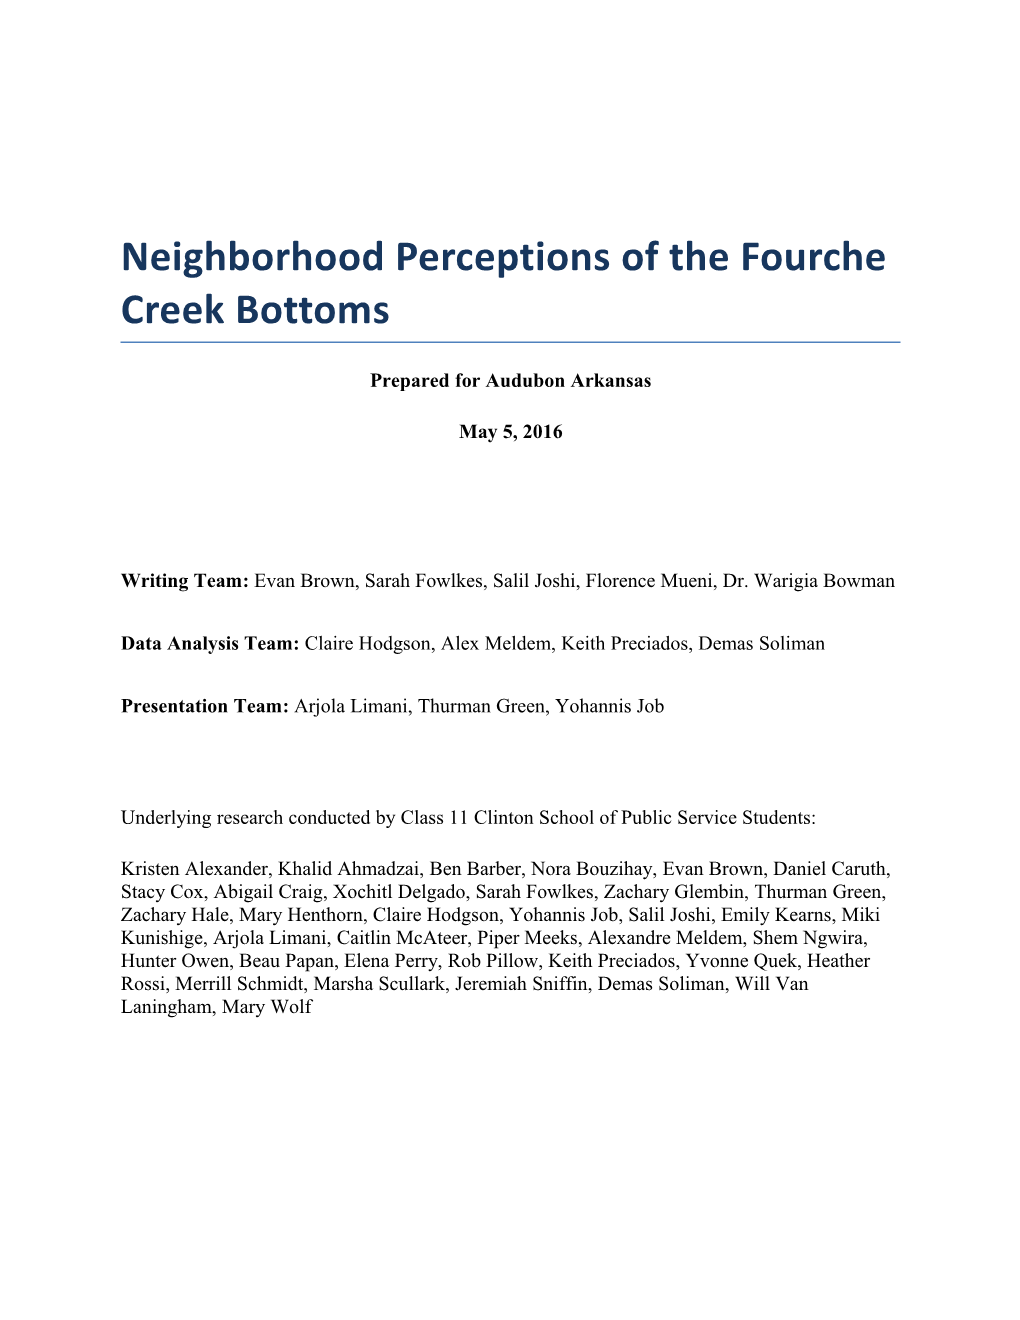 Neighborhood Perceptions of the Fourche Creek Bottoms